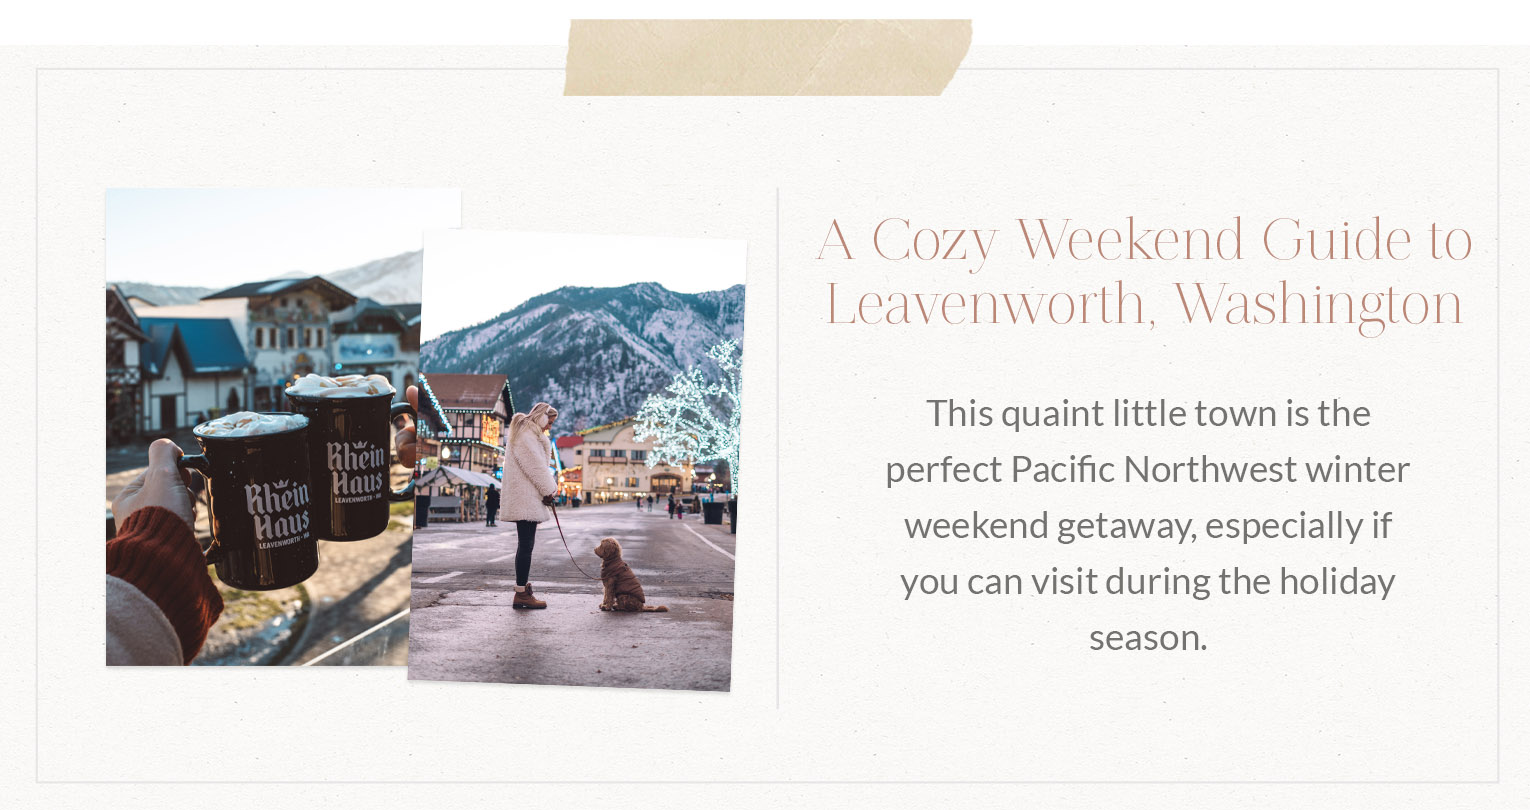 https://www.theblondeabroad.com/cozy-weekend-guide-to-leavenworth-washington/